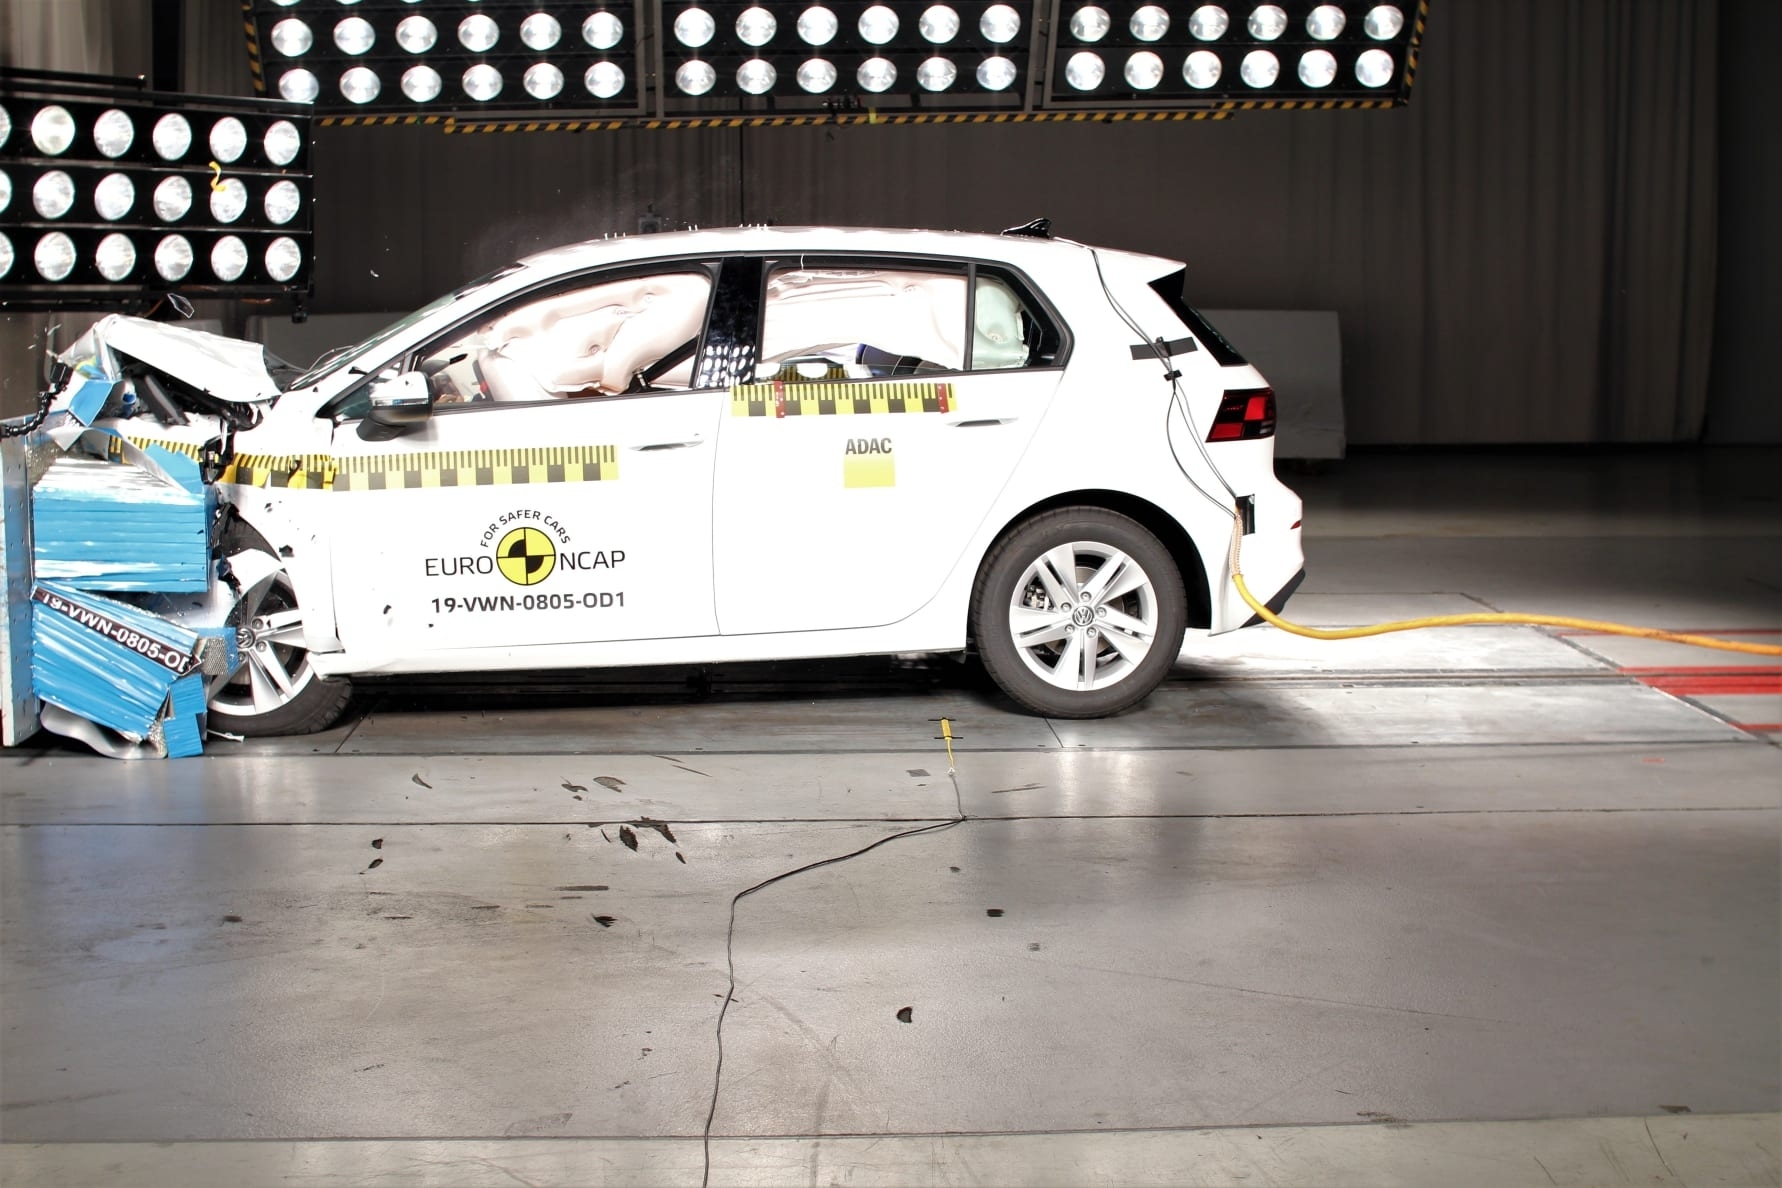 VW Golf frontal offset impact test Dec 2019